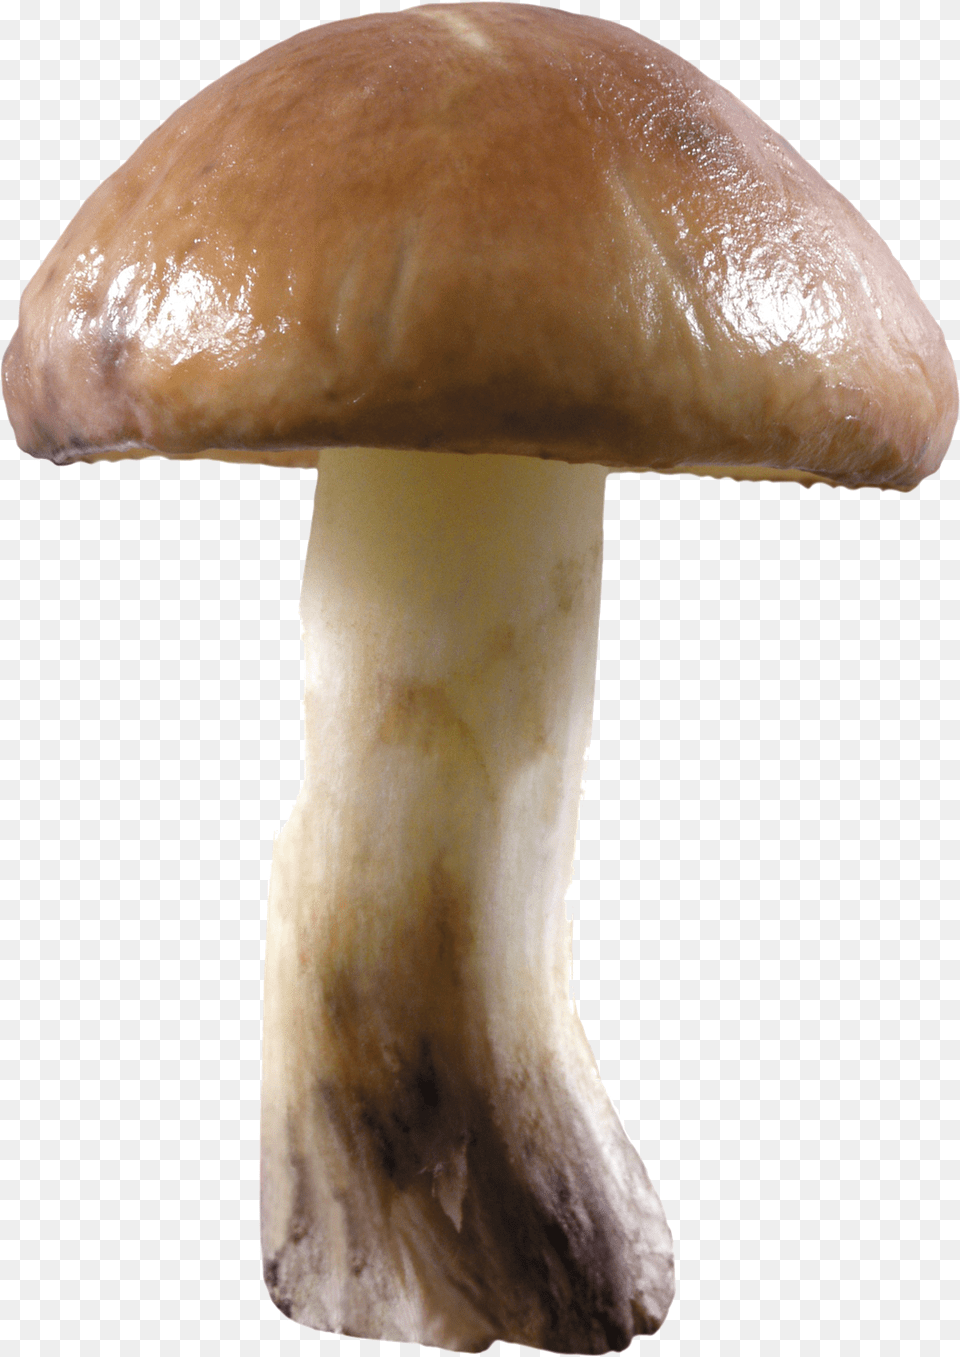 Mushroom Mushroom Without Background, Fungus, Plant, Agaric, Amanita Free Transparent Png